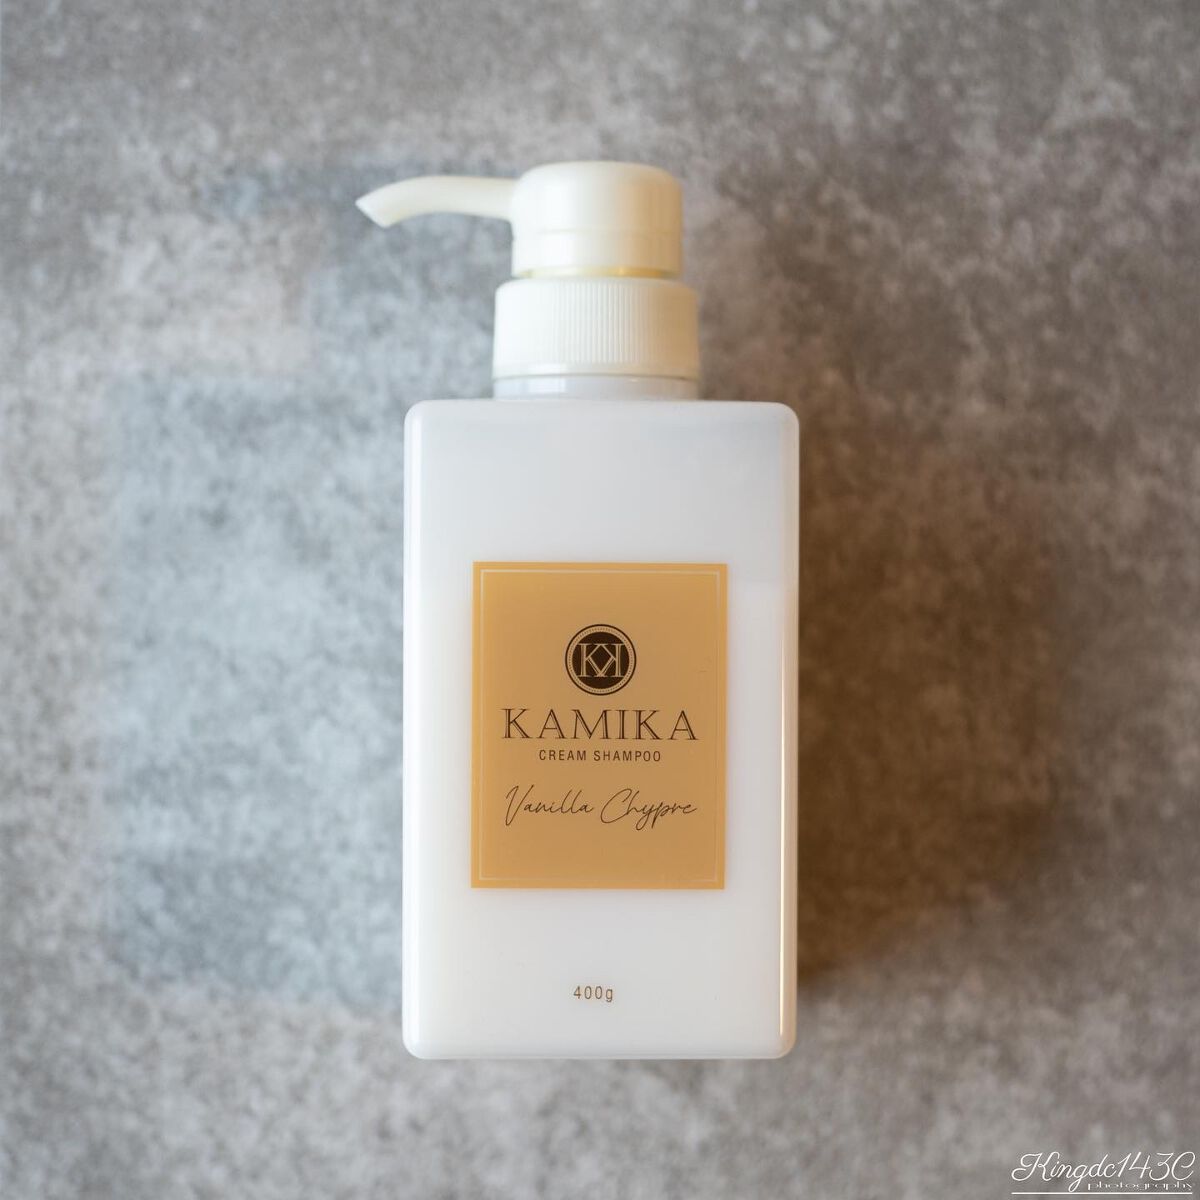 KAMIKA カミカ クリームシャンプー バニラ・シプレの香り